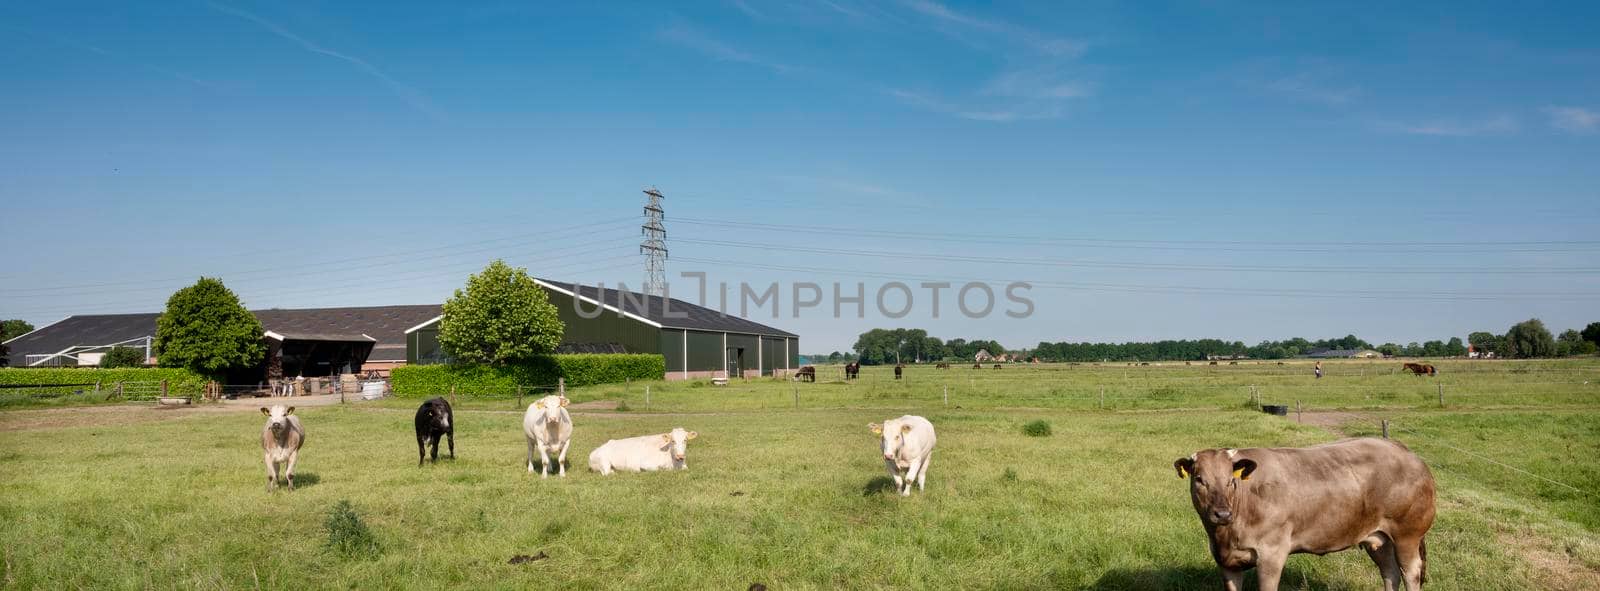 beef cows under blue sky in green grassy meadow in holland between nijmegen and arnhem by ahavelaar